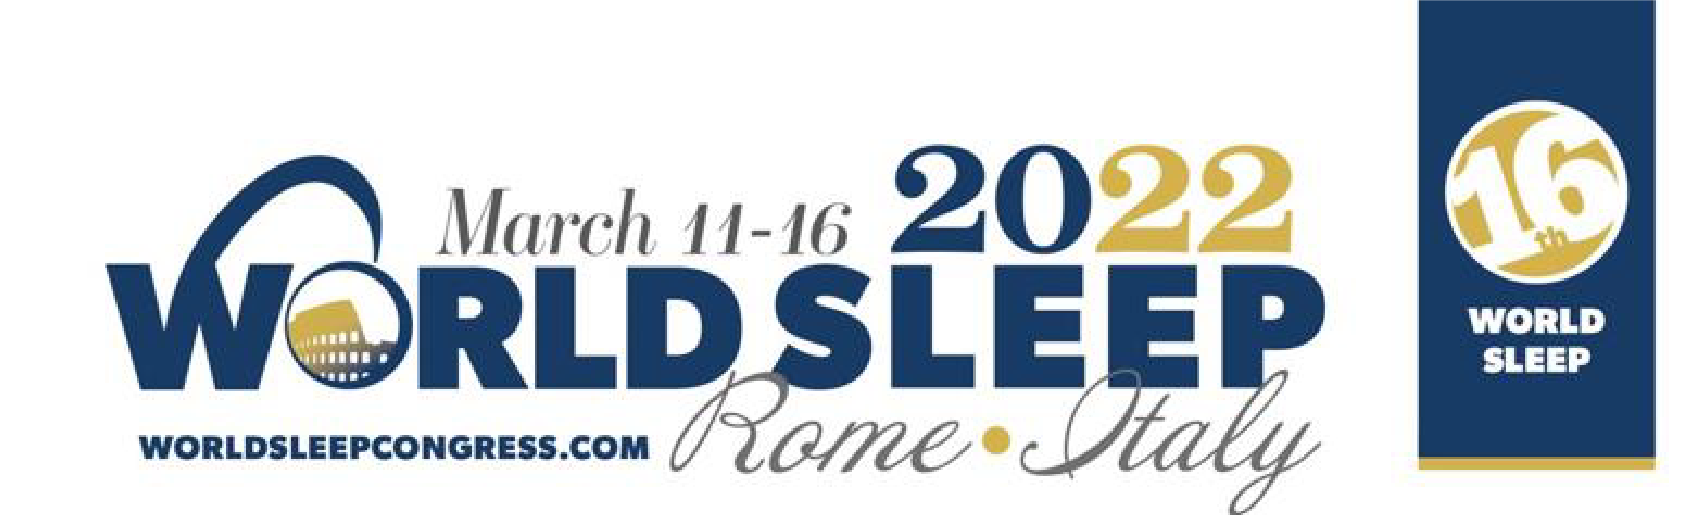 World Sleep Congress 2022